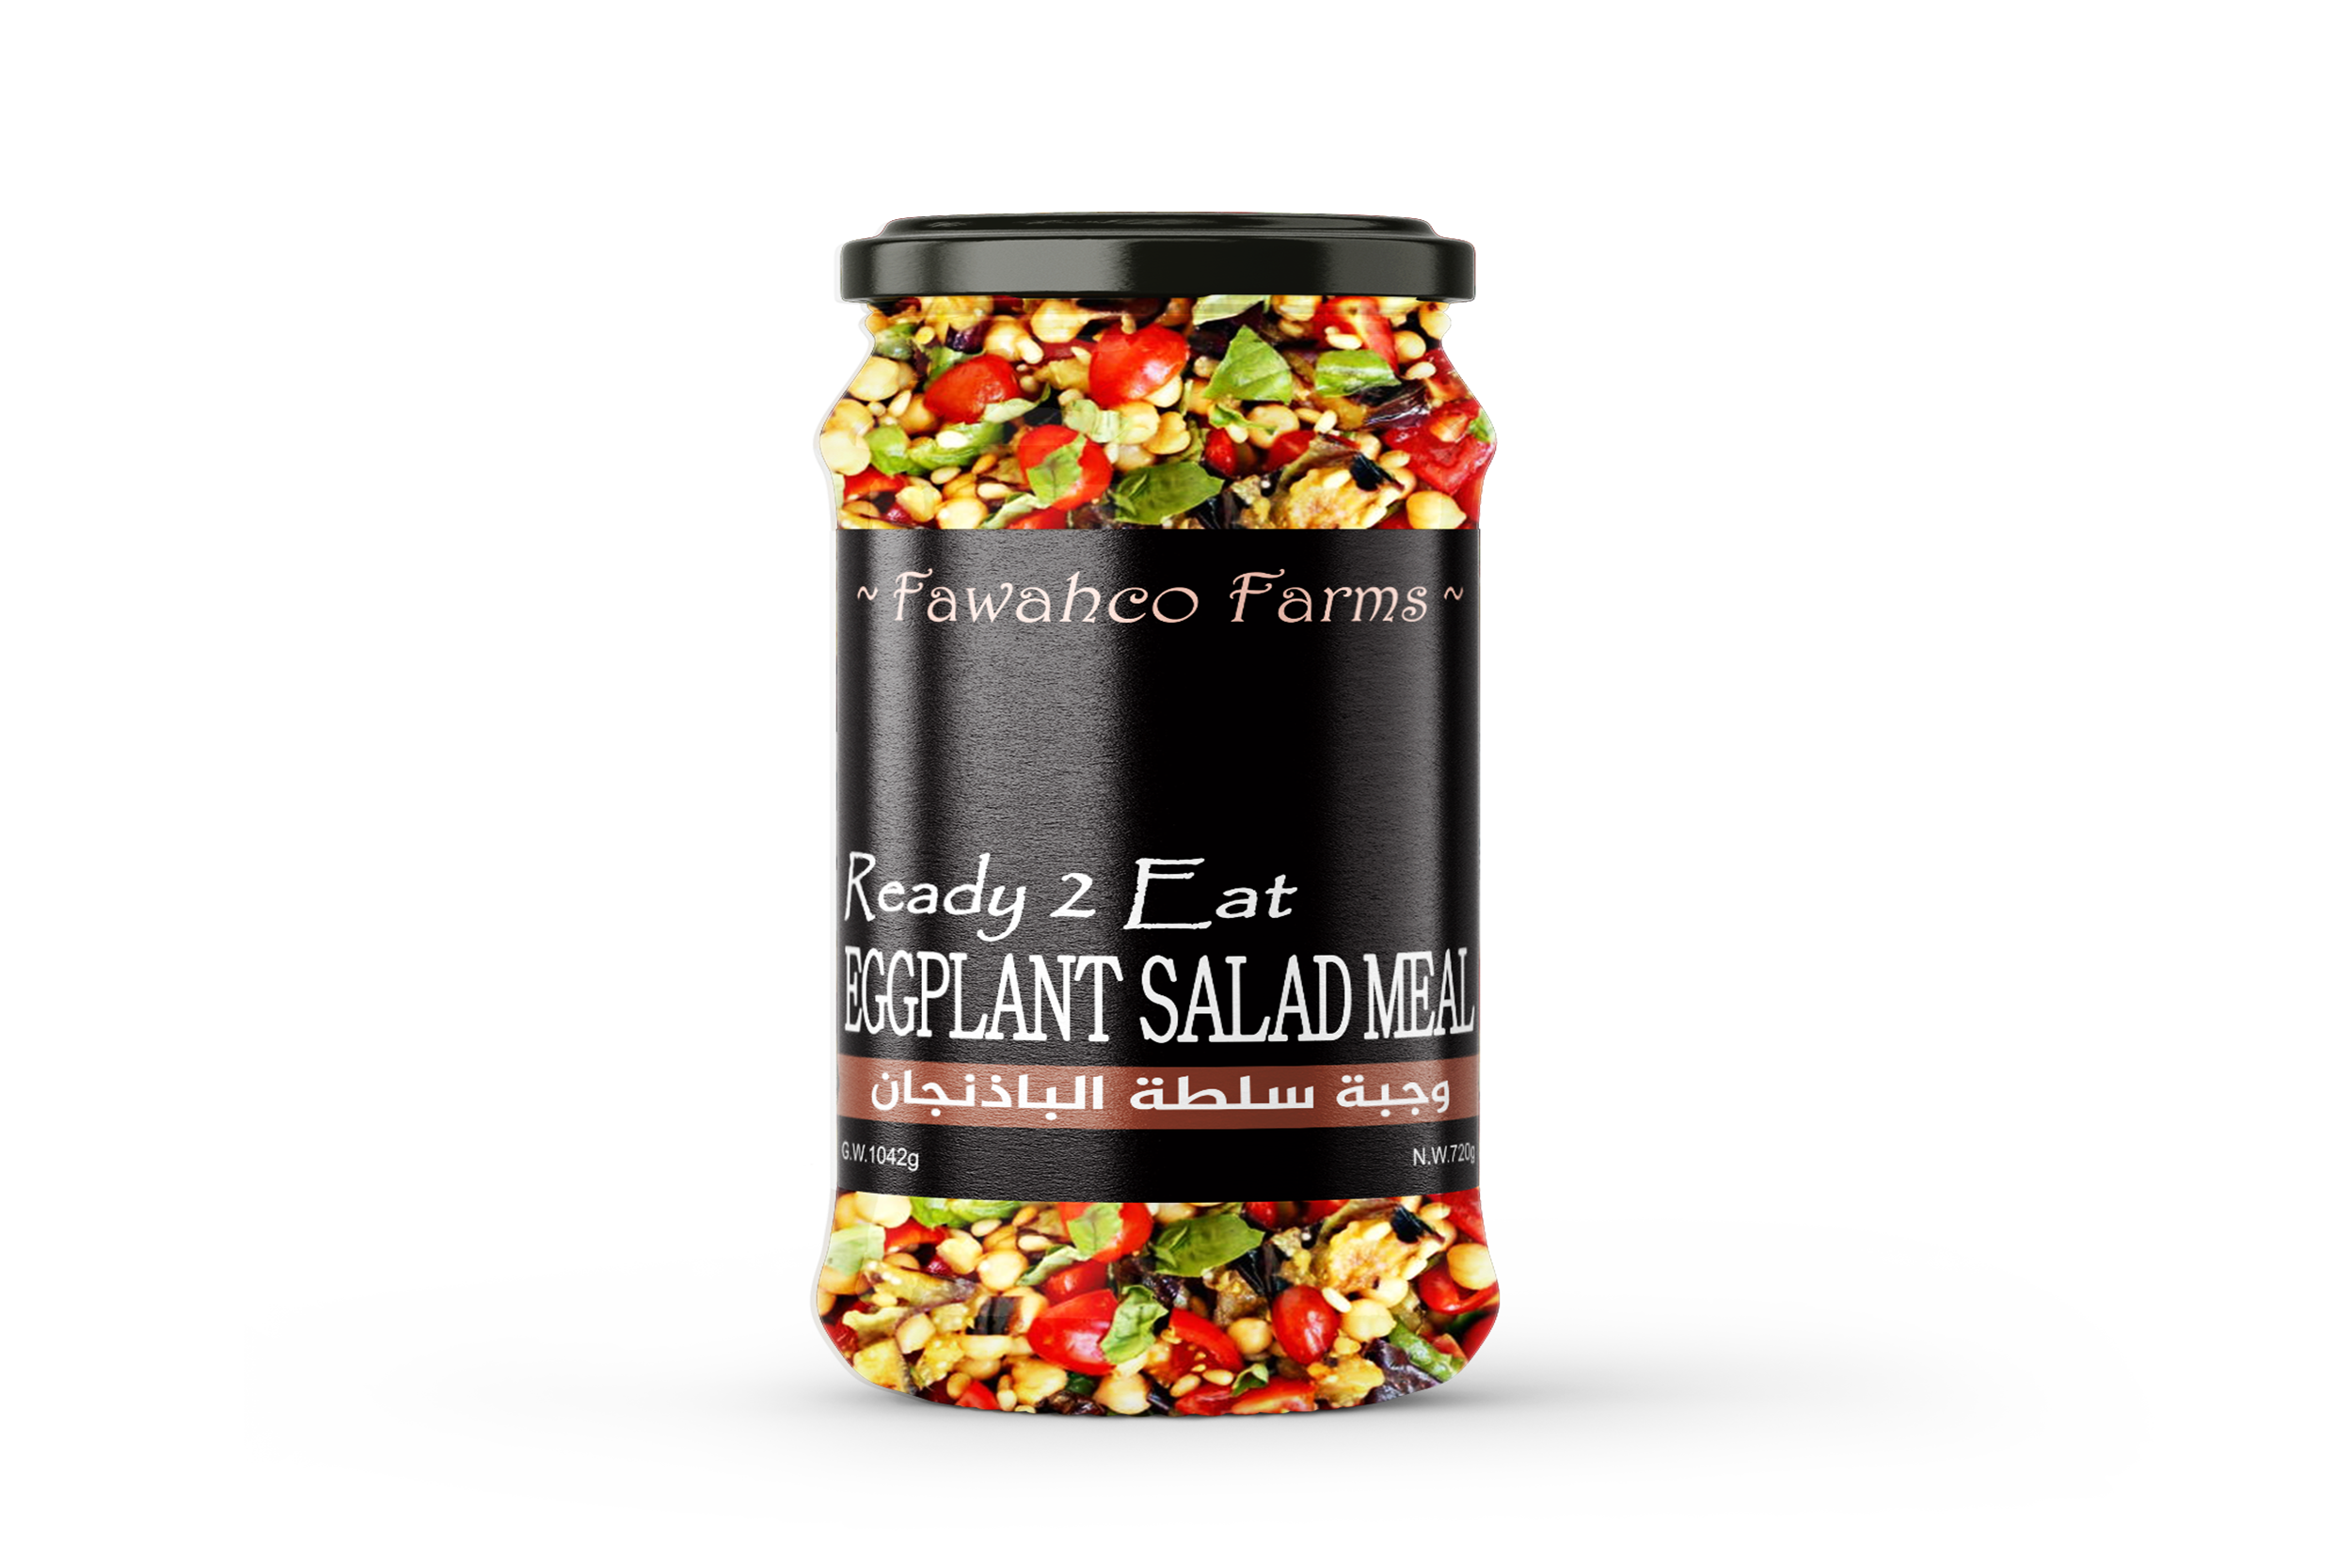 Eggplant Salad Meal